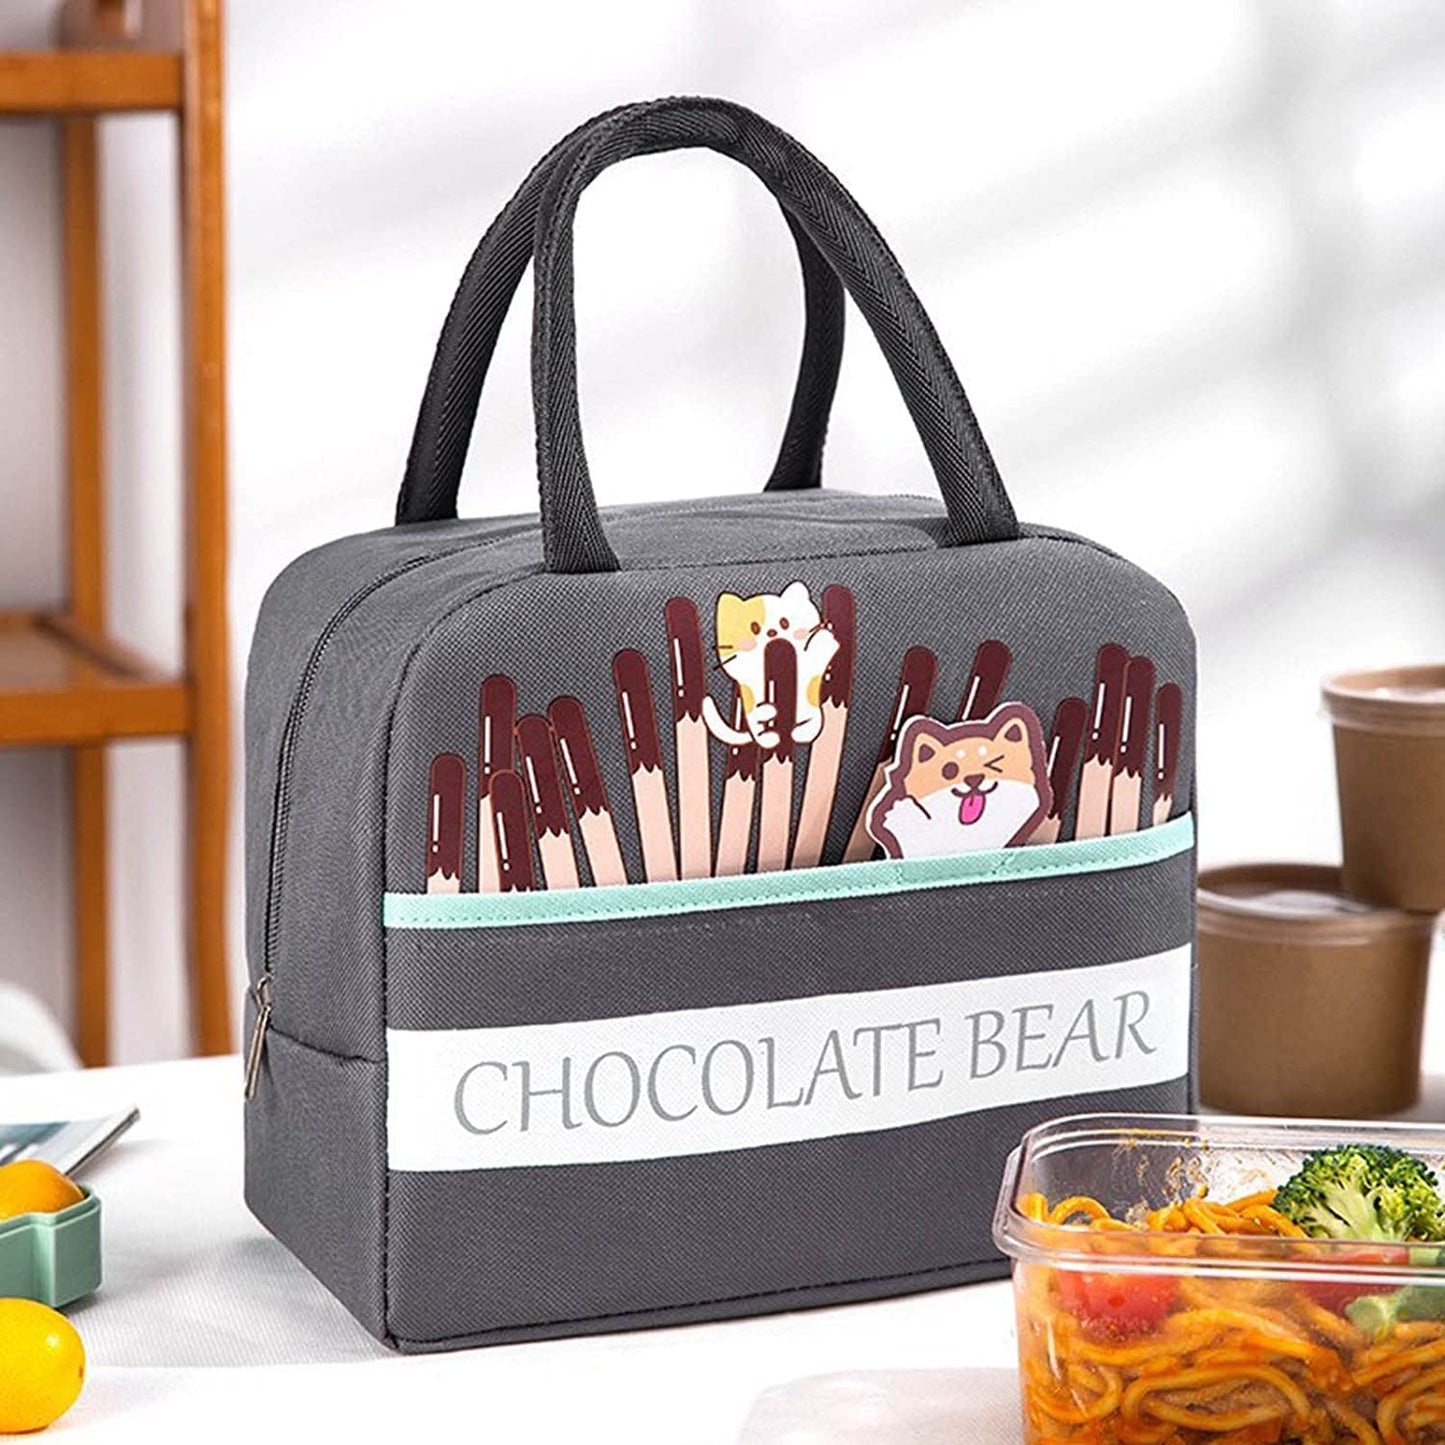 Insulated Reusable Lunch Bento Bag (Chocolate Bear)